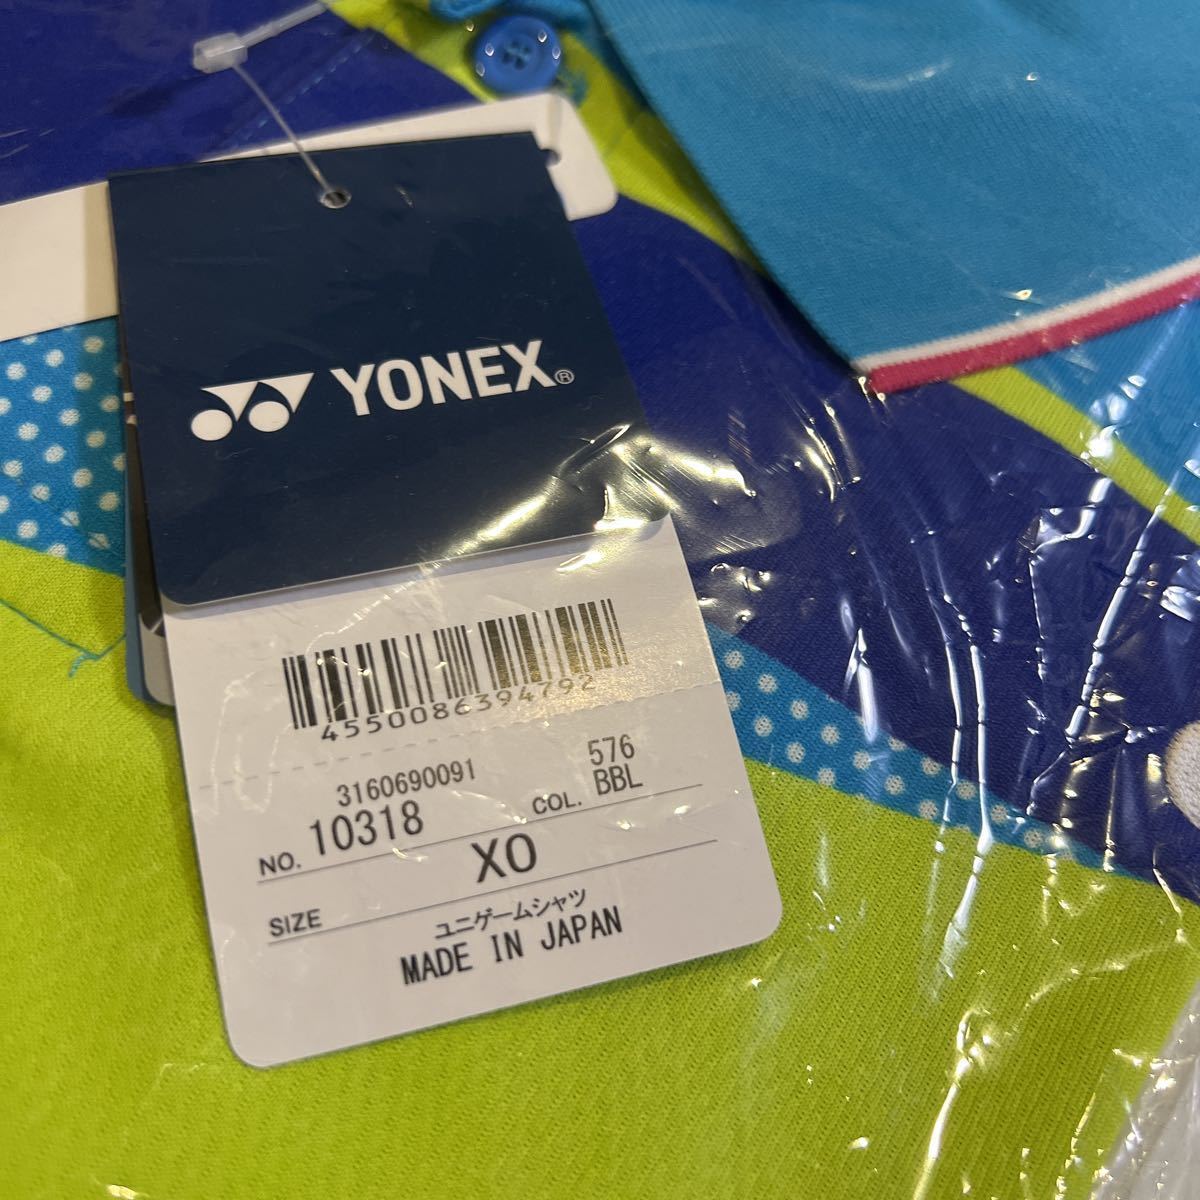  free shipping Yonex game shirt polo-shirt Uni XO rare size made in Japan stylish new goods 